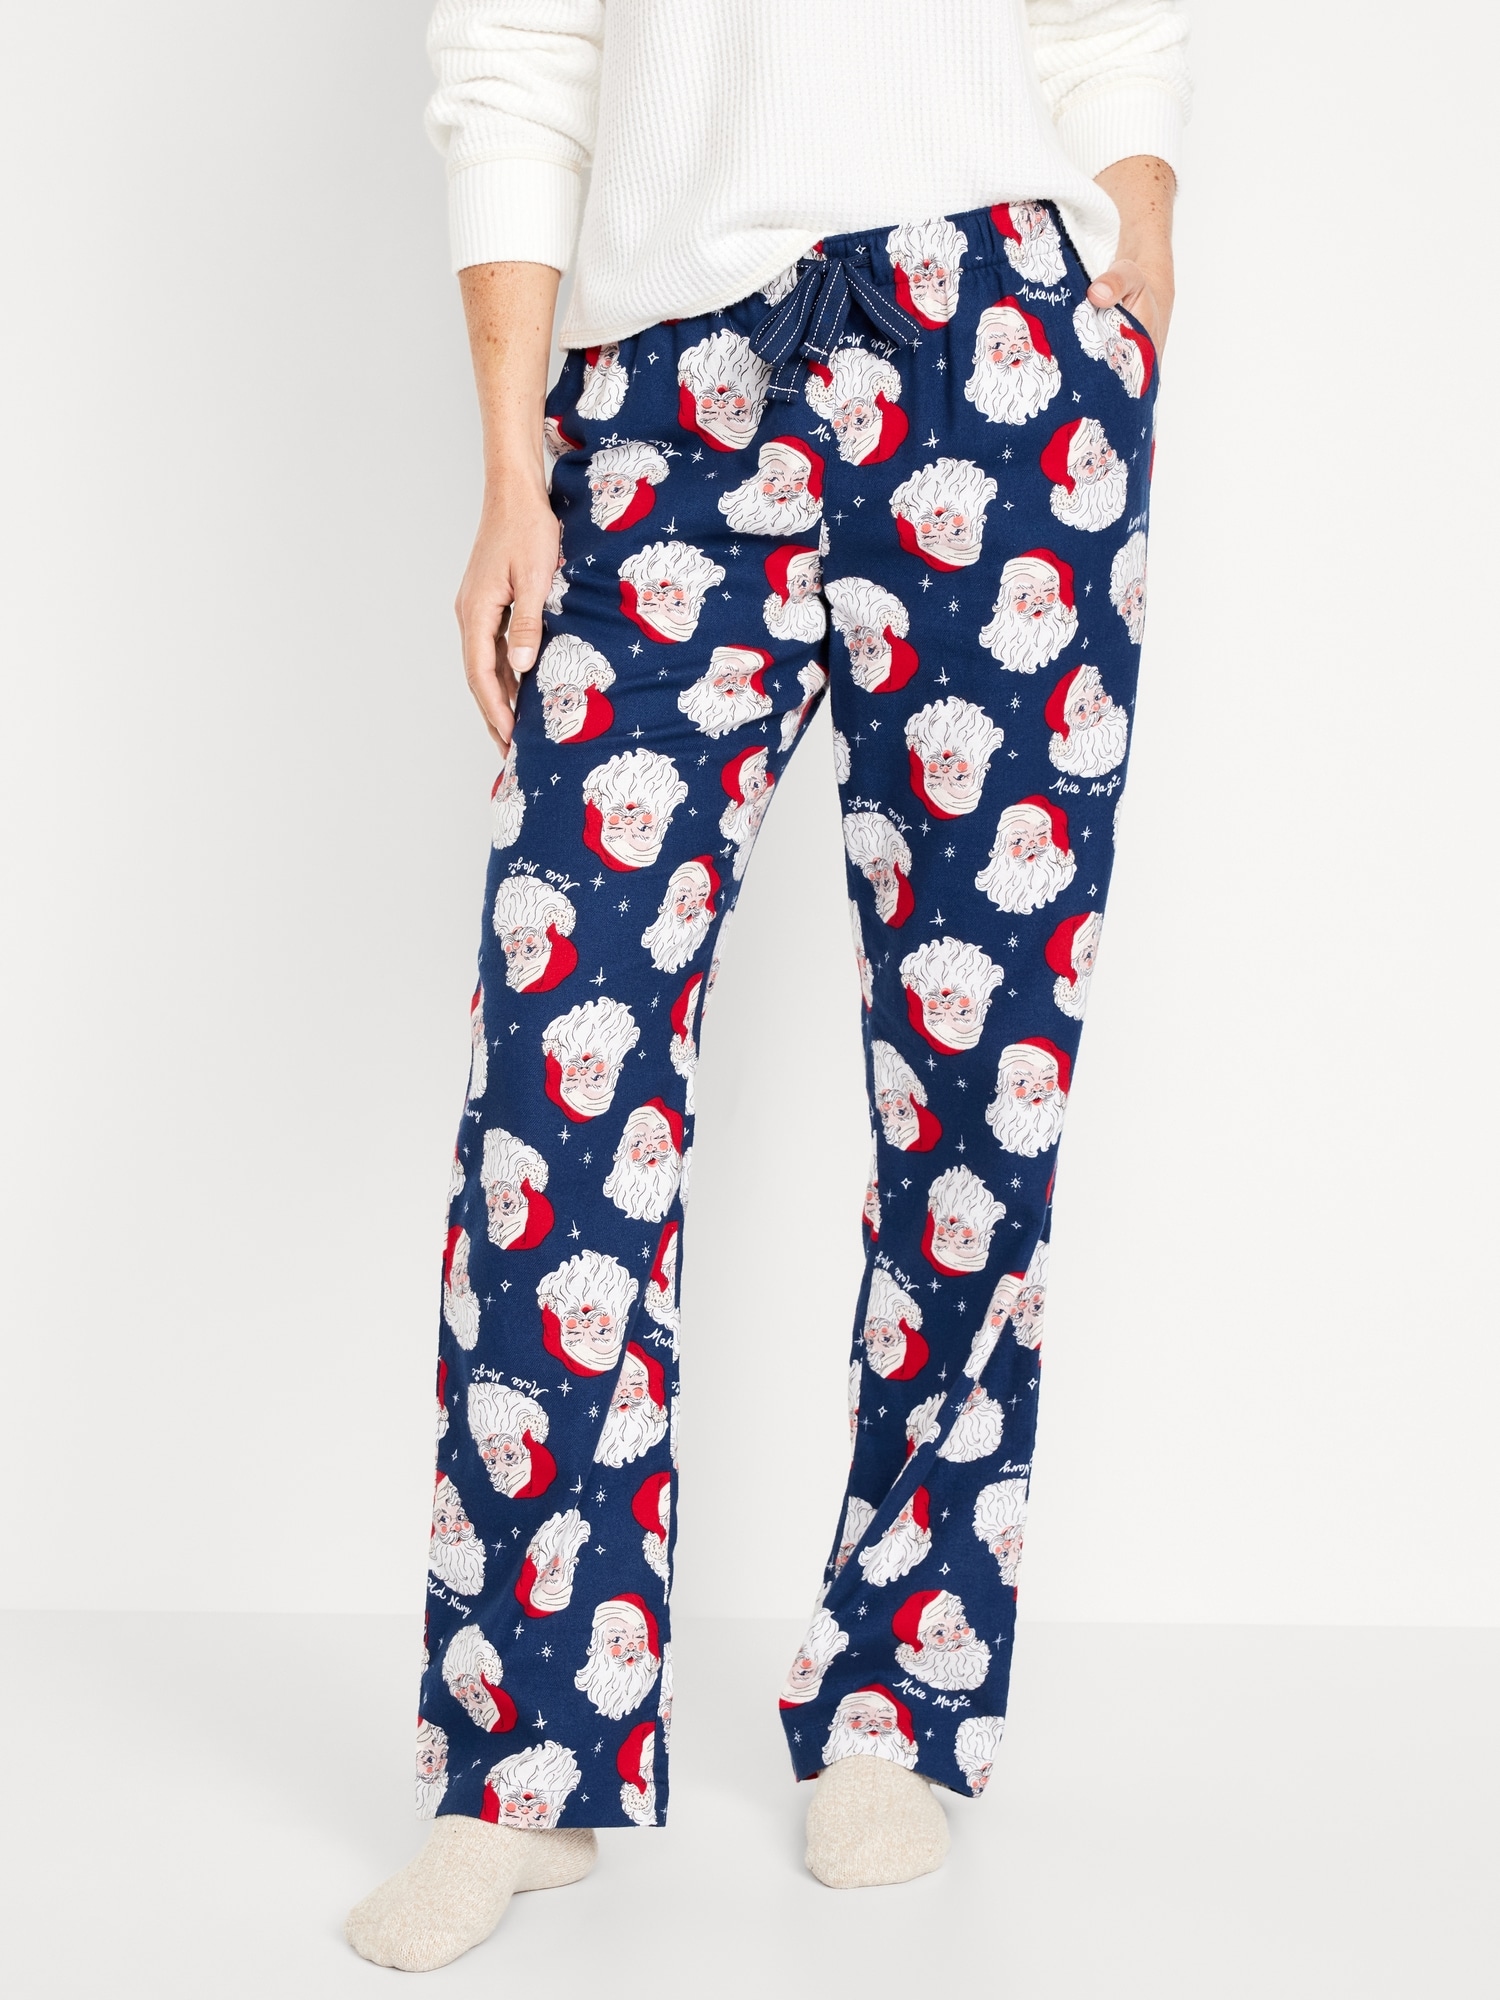 NWT Old Navy Red Pine Tree Thermal Knit Pajama Pants Sleep Leggings Women  SMLXL